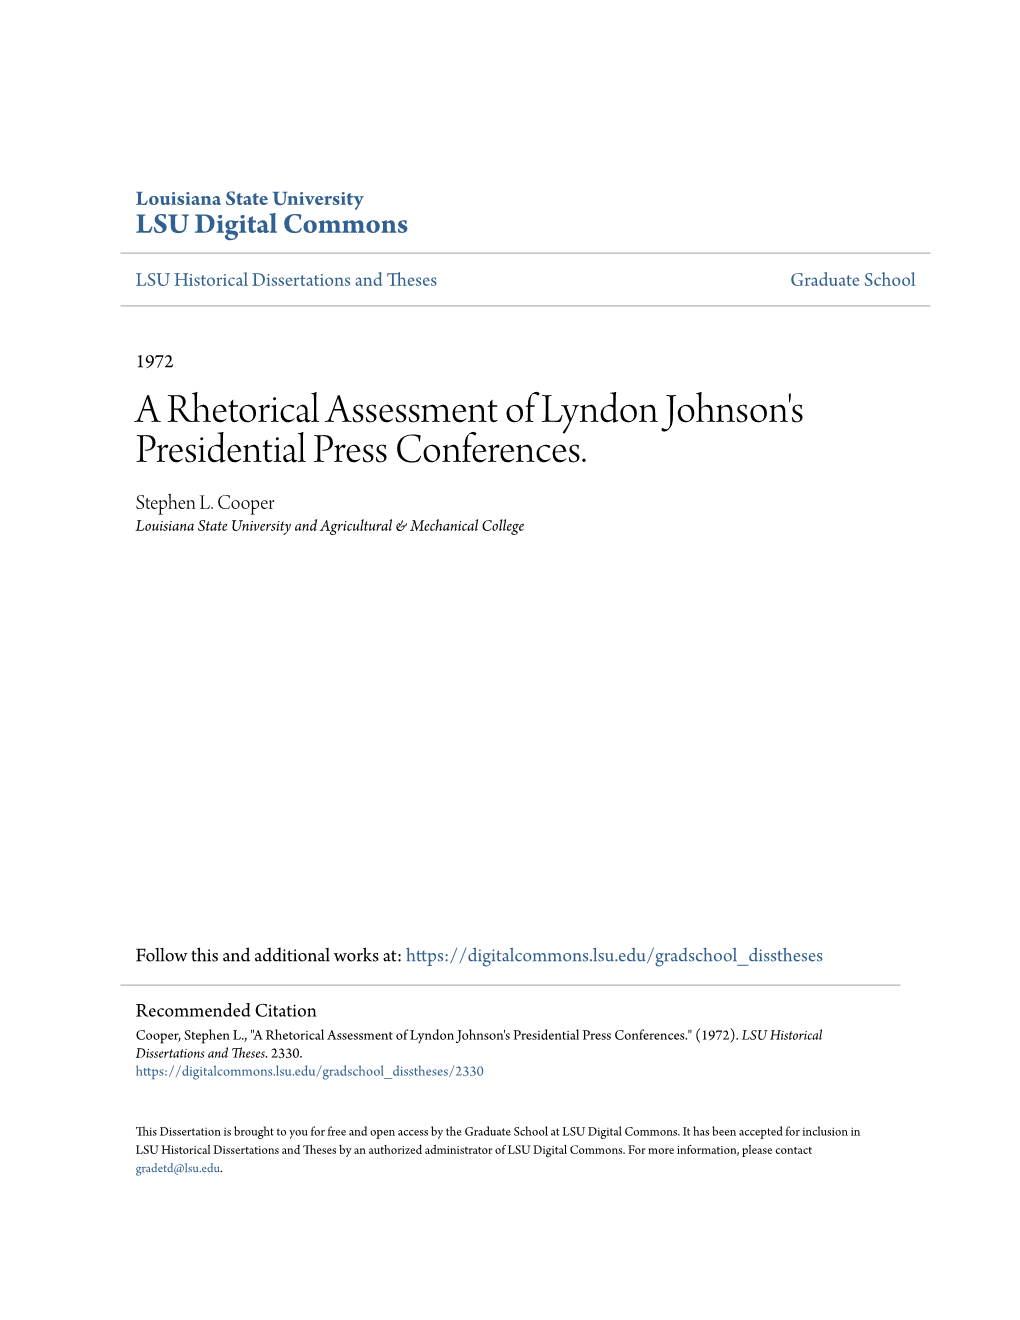 A Rhetorical Assessment of Lyndon Johnson's Presidential Press Conferences